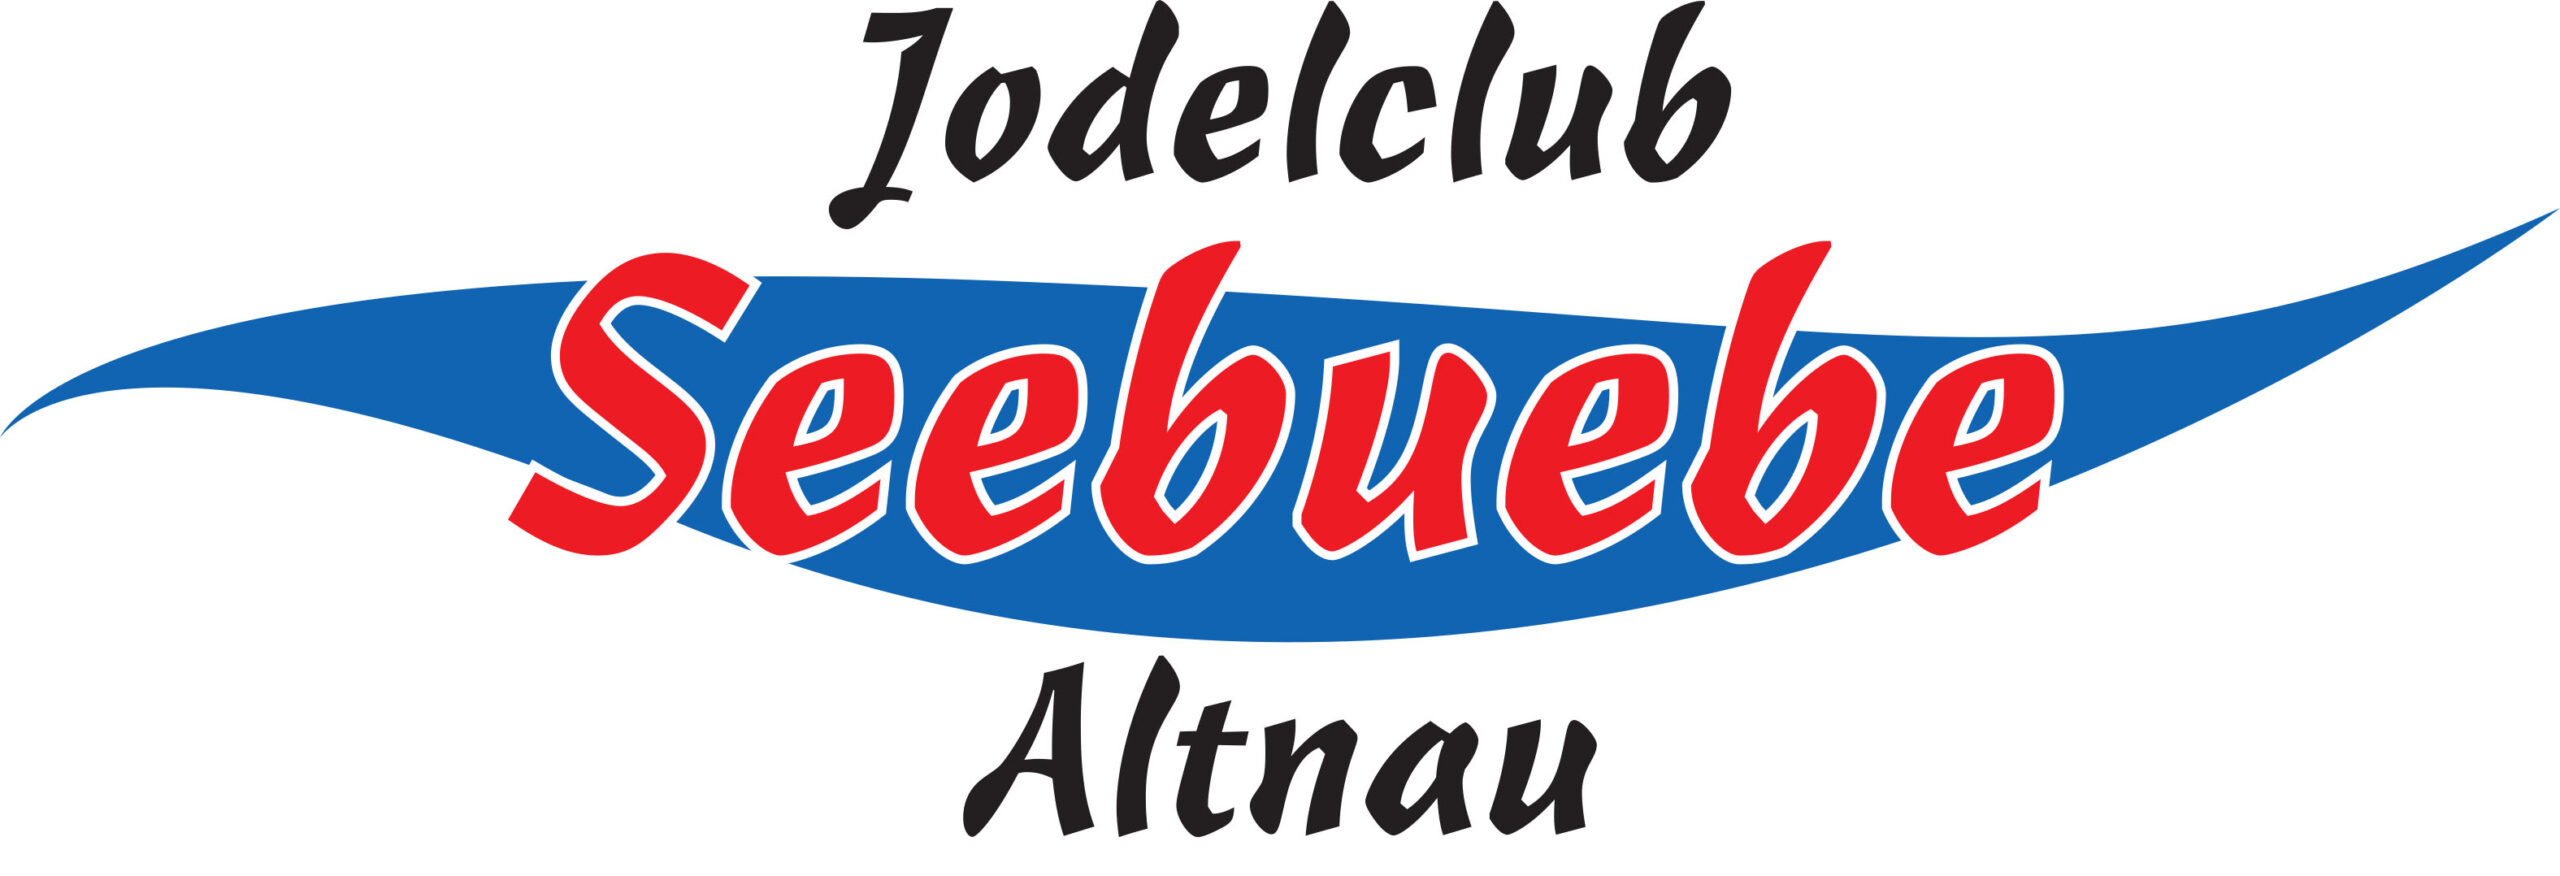 Jodelclub Seebuebe Altnau